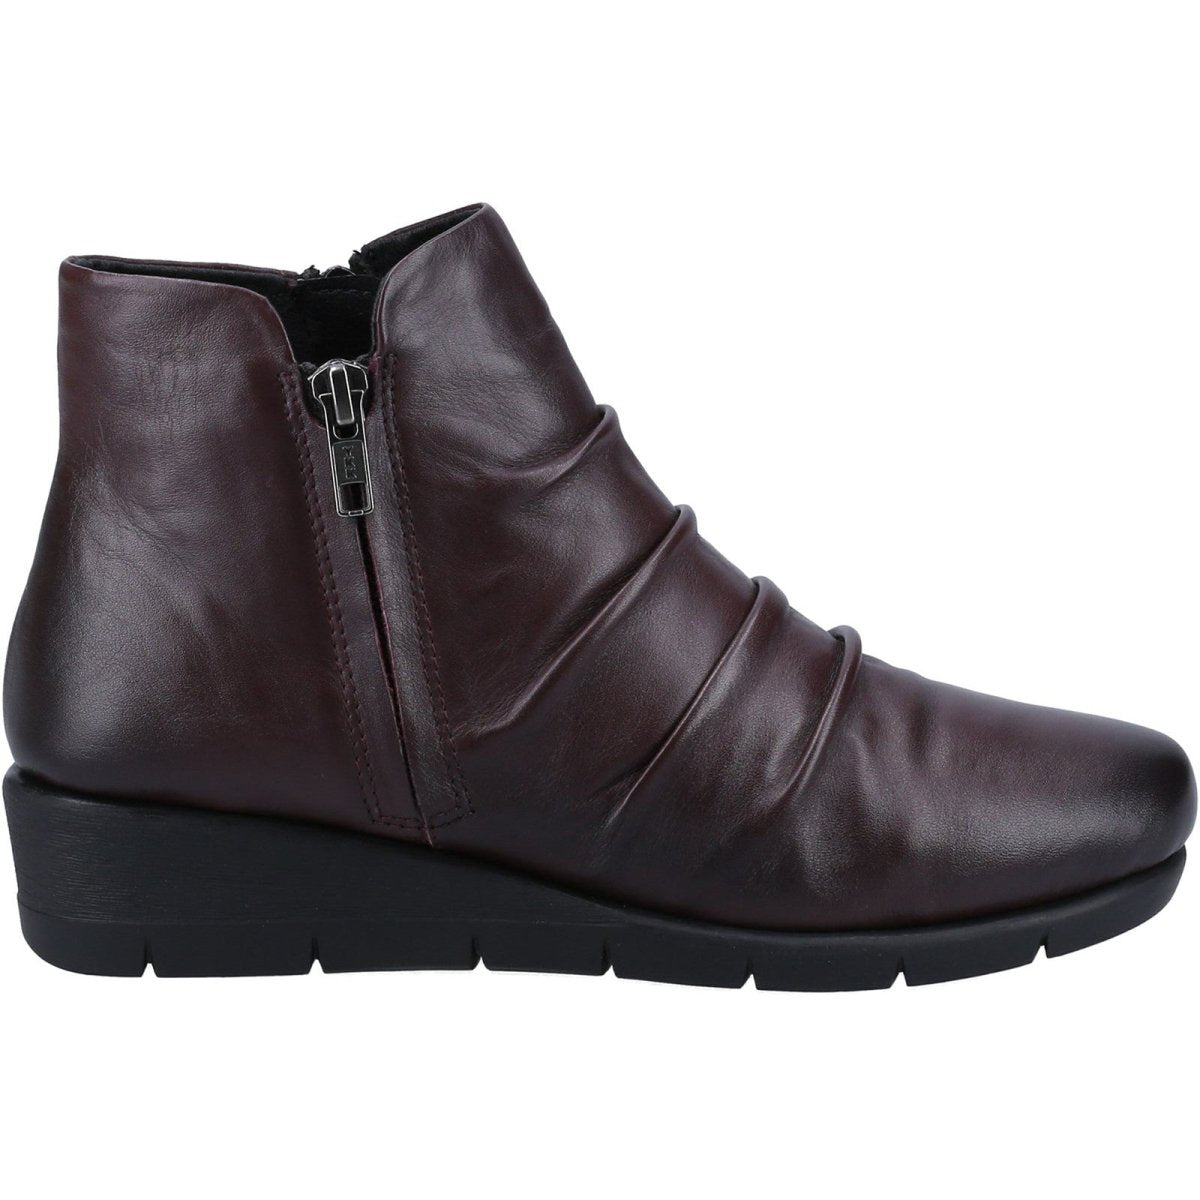 Fleet & Foster Plockton Leather Ladies Ankle Boot - Shoe Store Direct